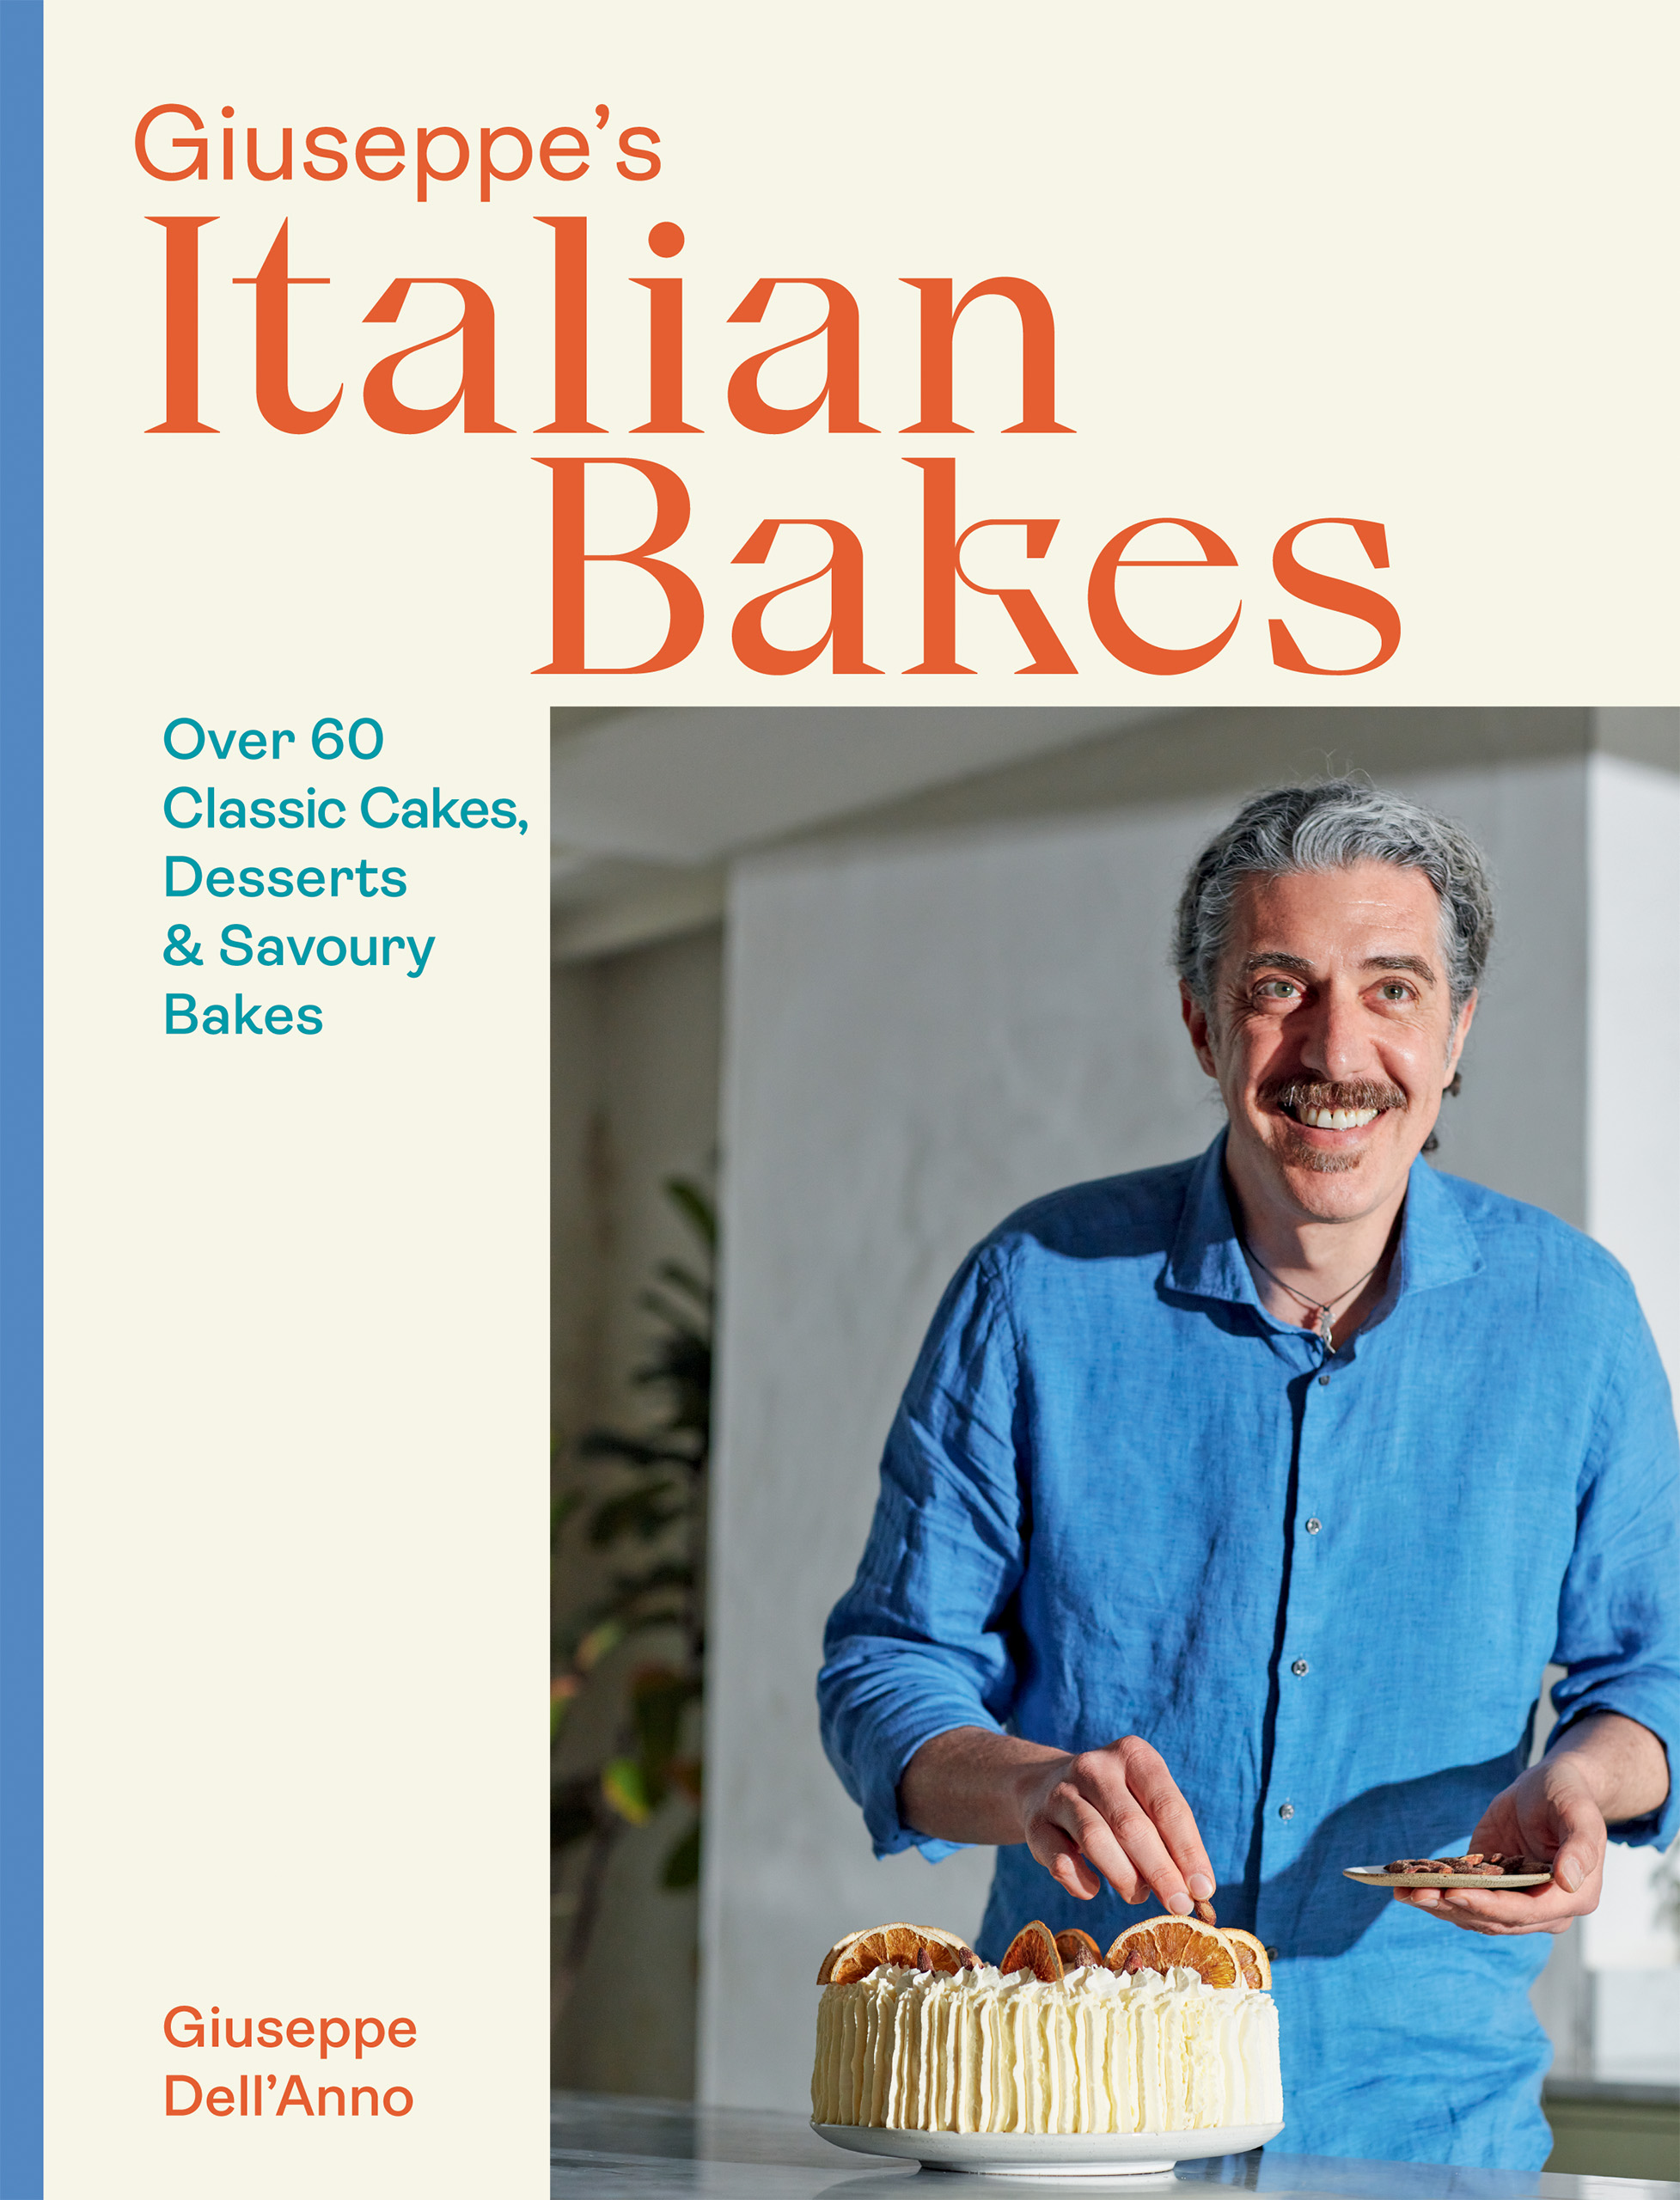 Giuseppe's Italian Bakes